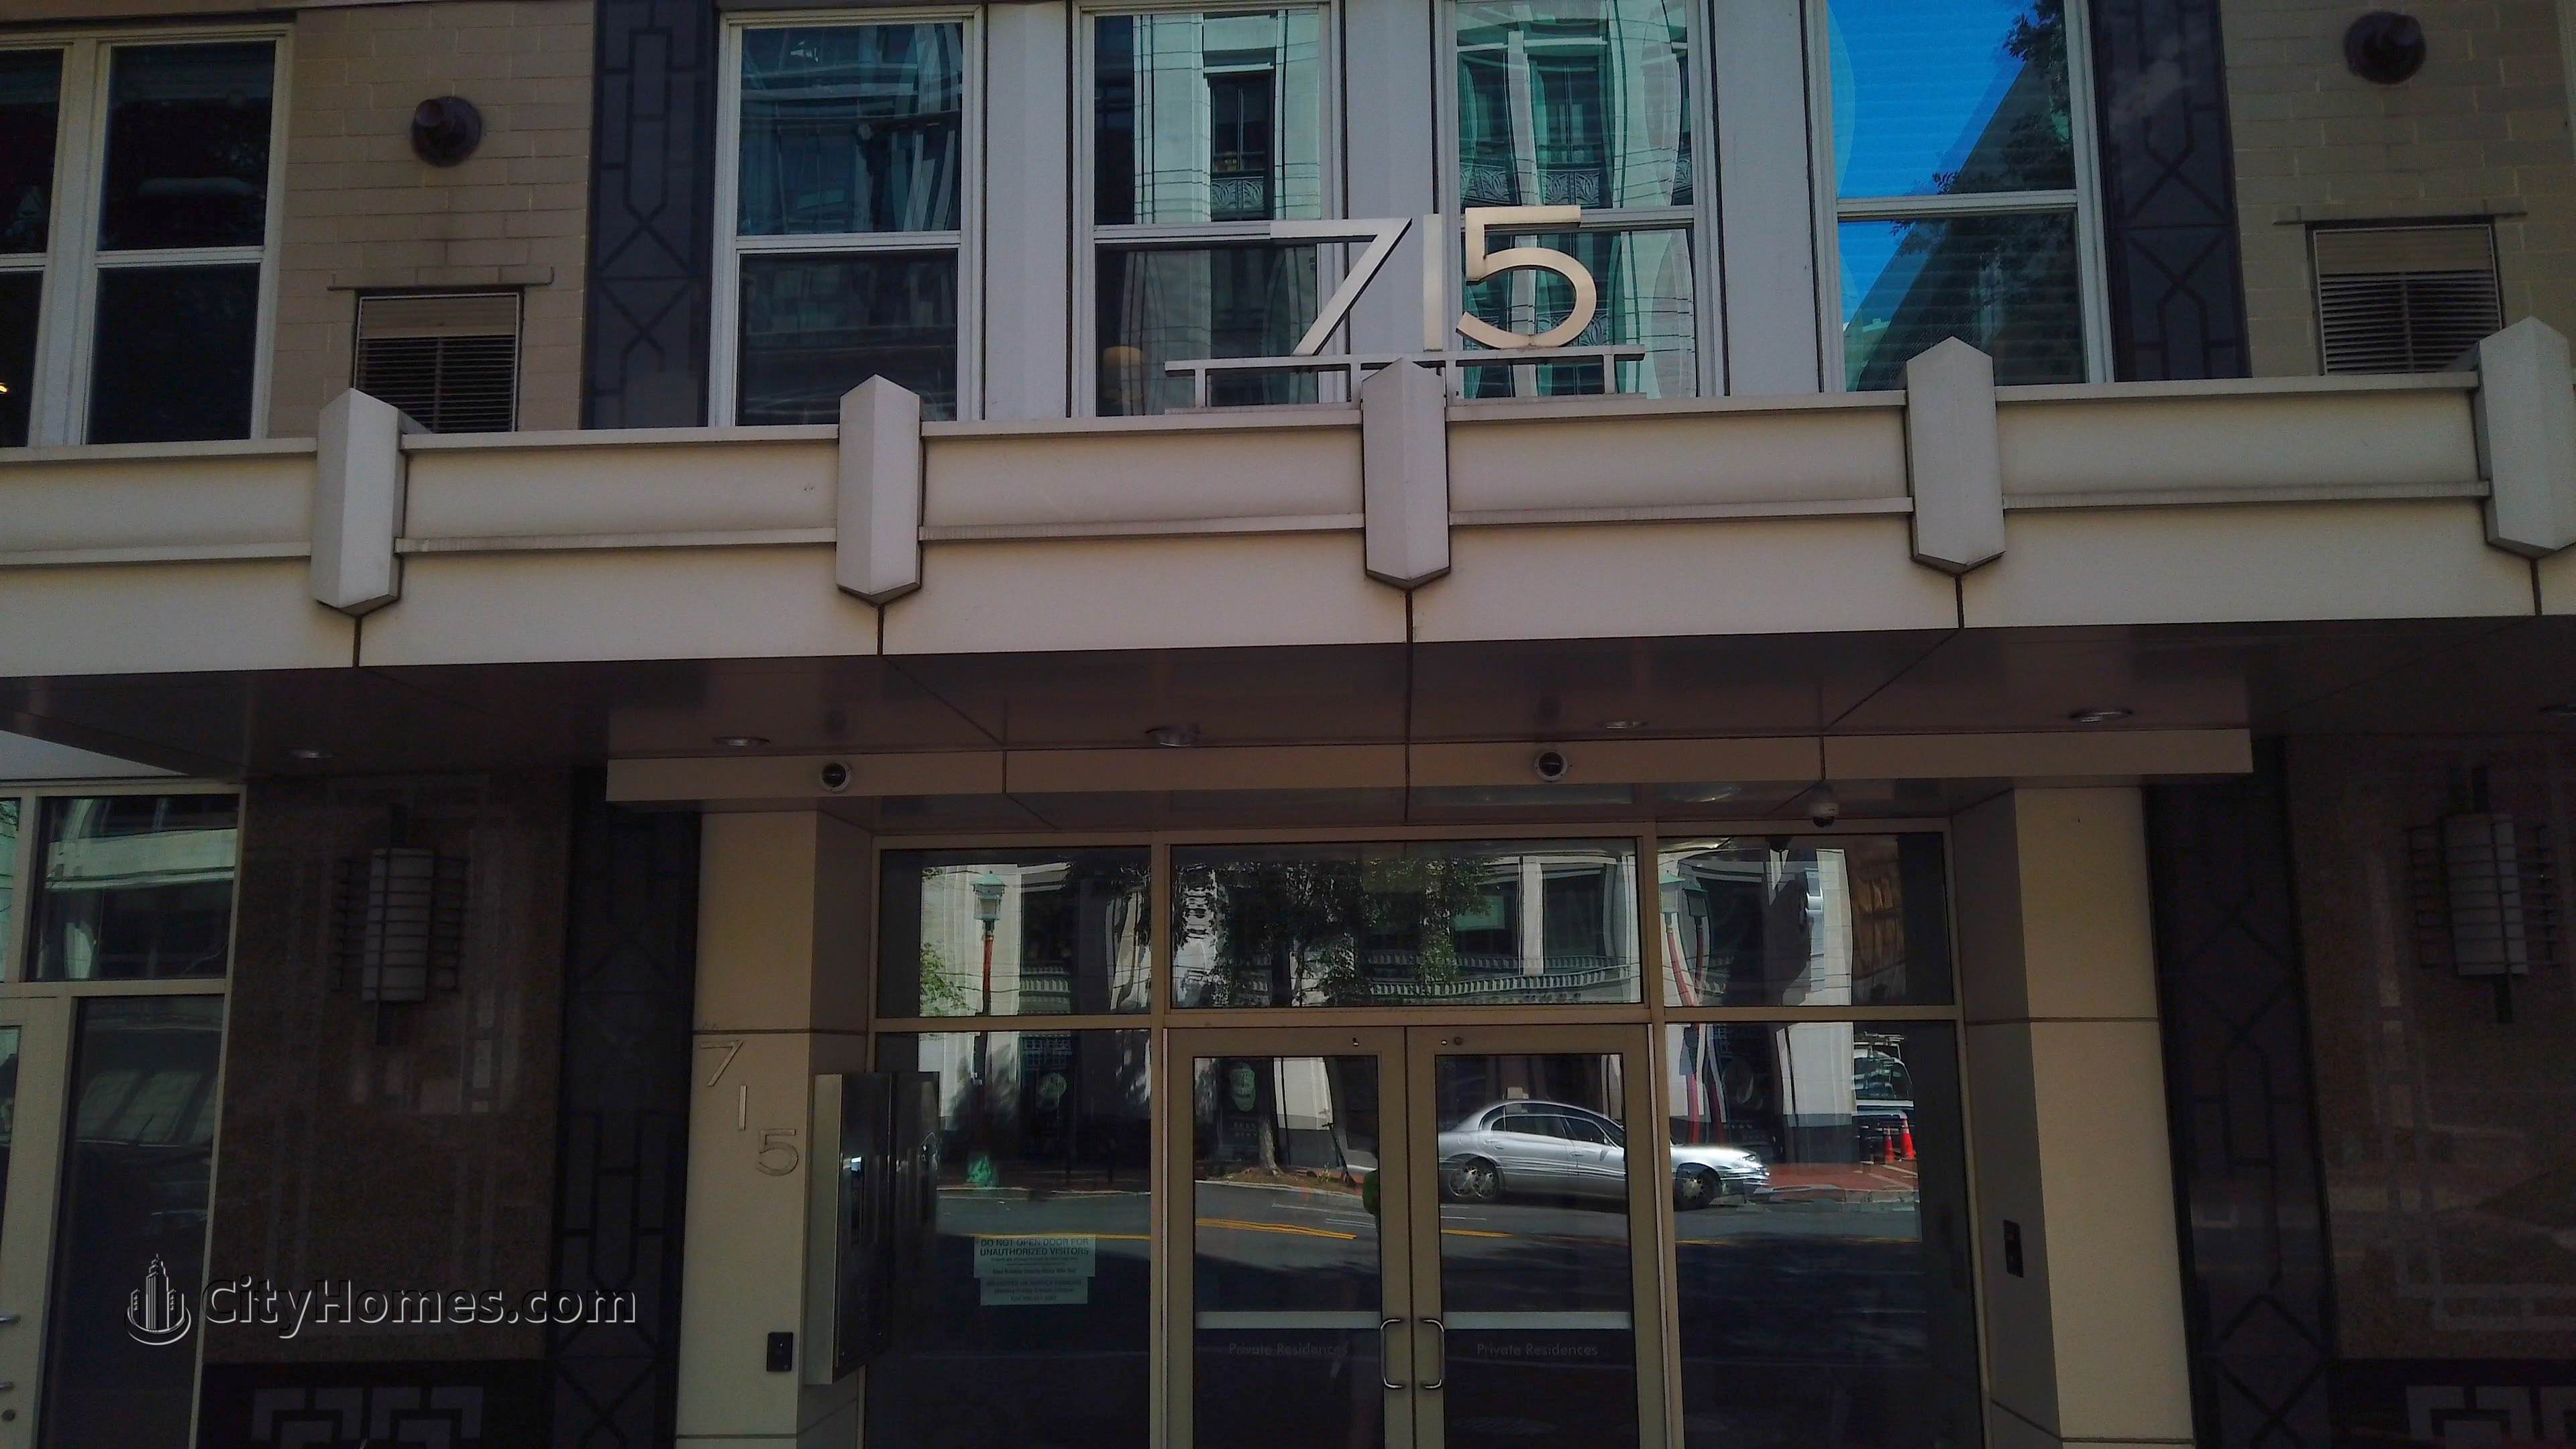 The Cosmopolitan edificio a 715 6th St NW, Chinatown, Washington, DC 20001